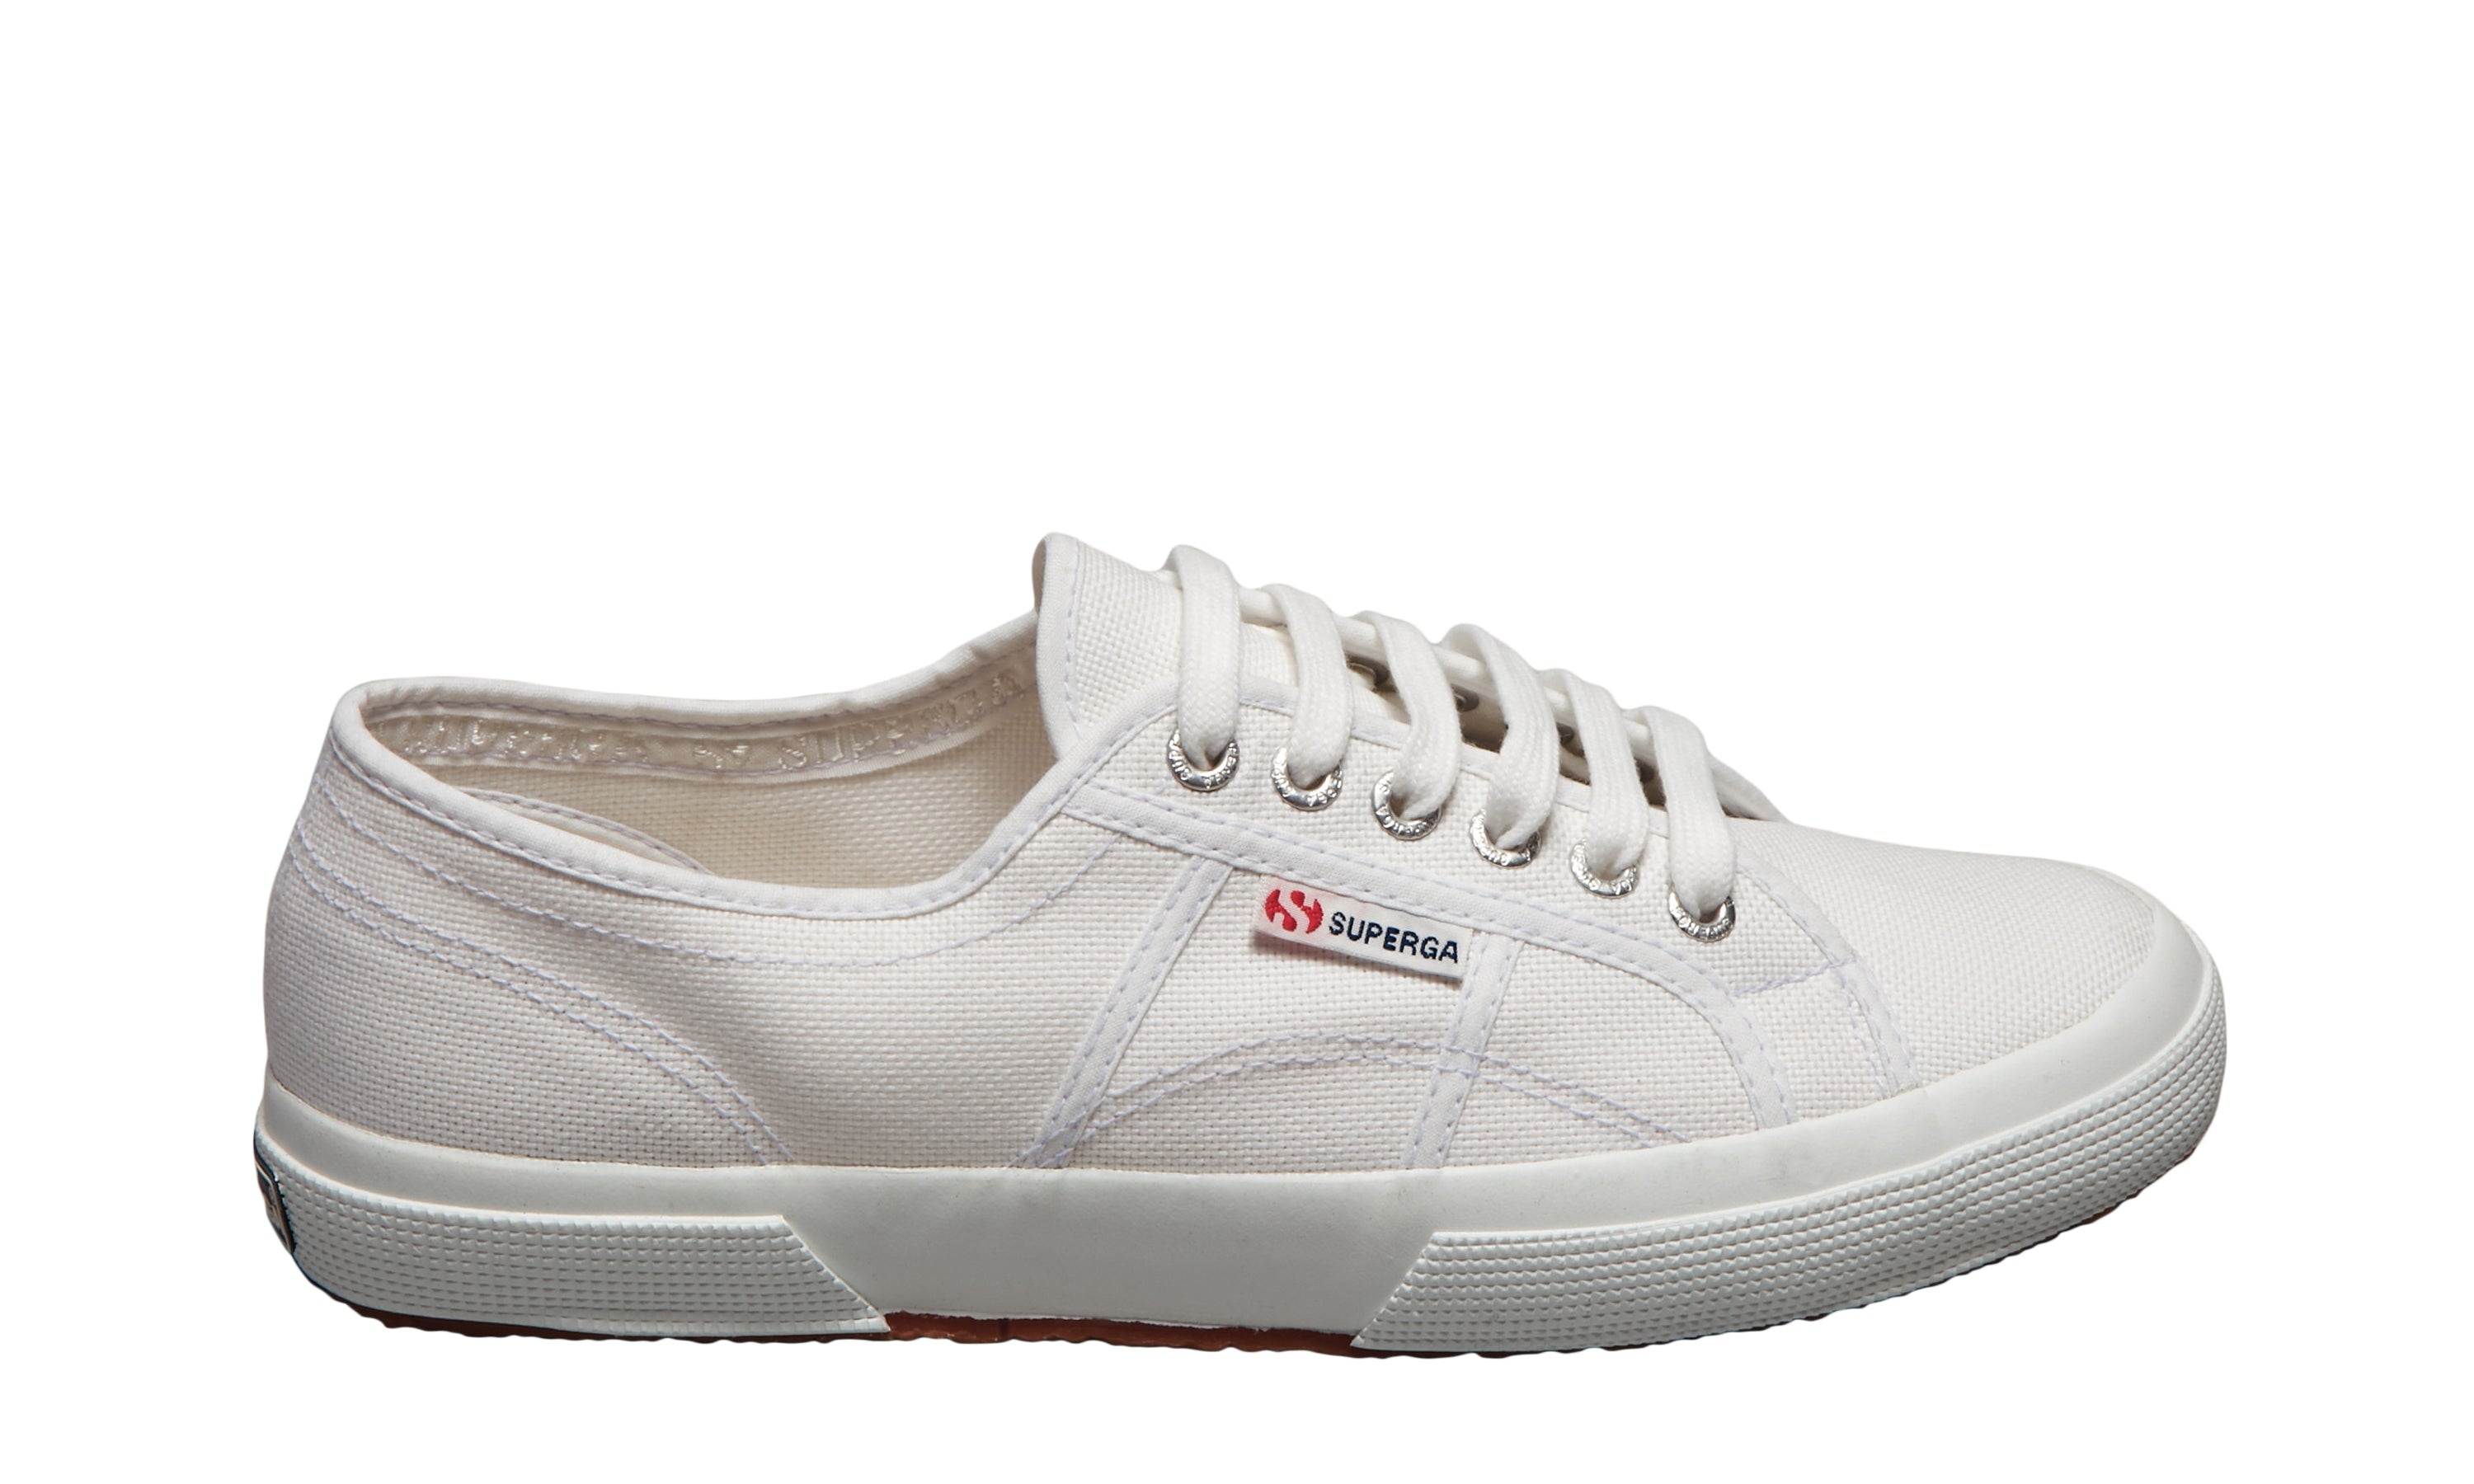 Superga - The Classic Lace Sneaker in White